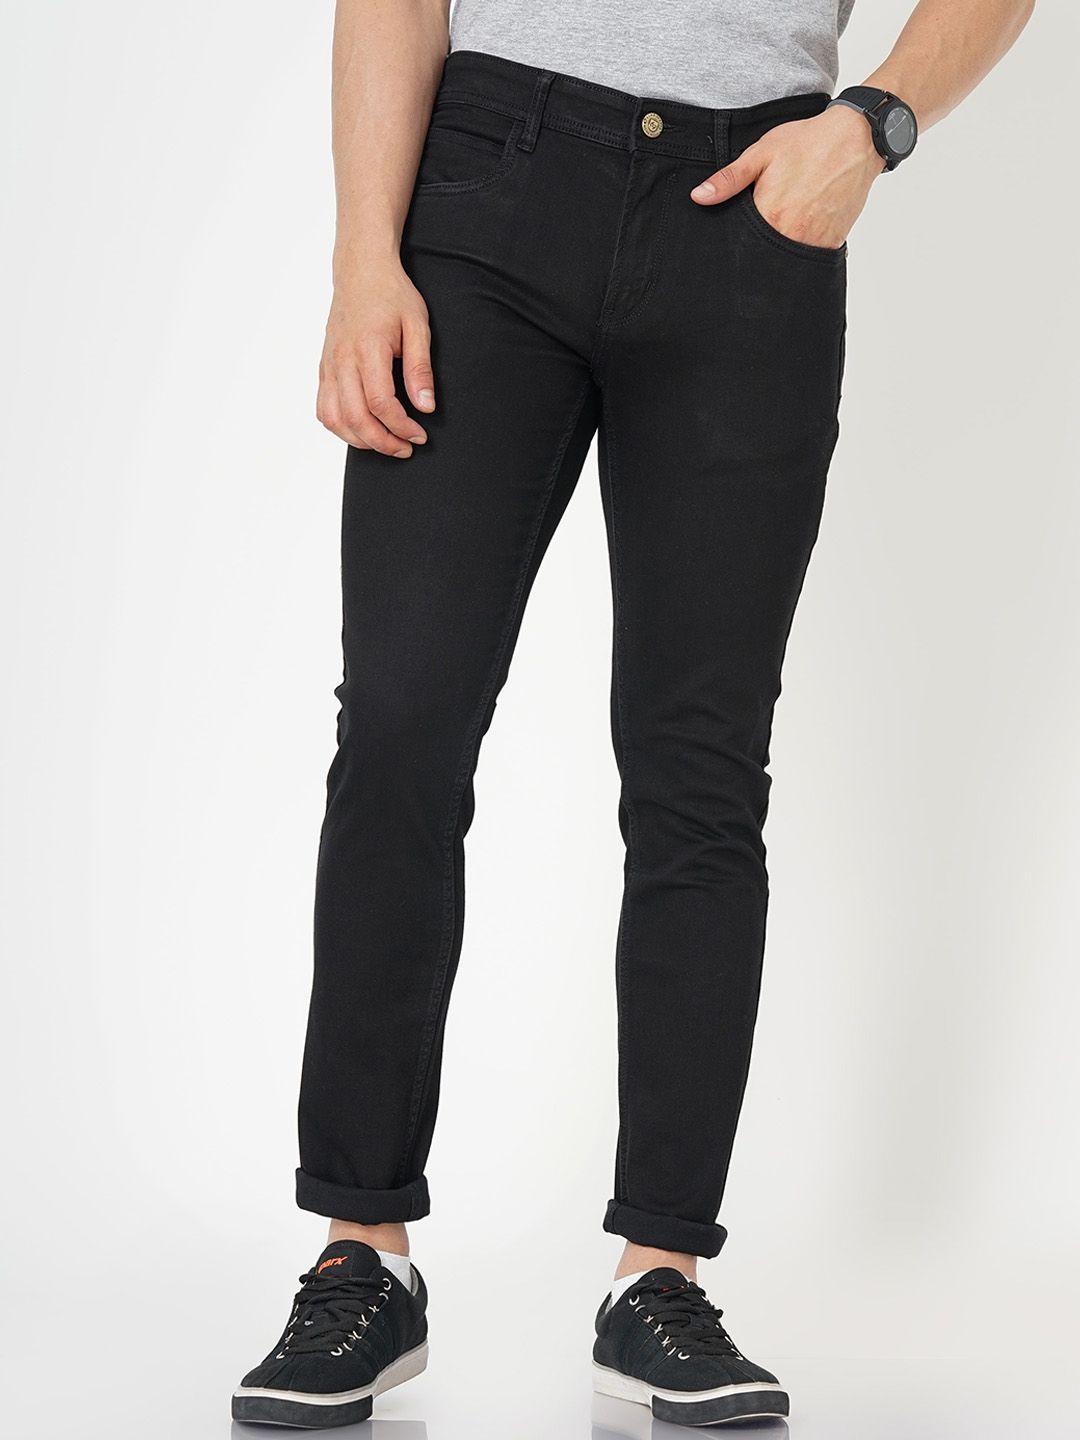 llak-jeans-men-mid-rise-skinny-fit-stretchable-jeans